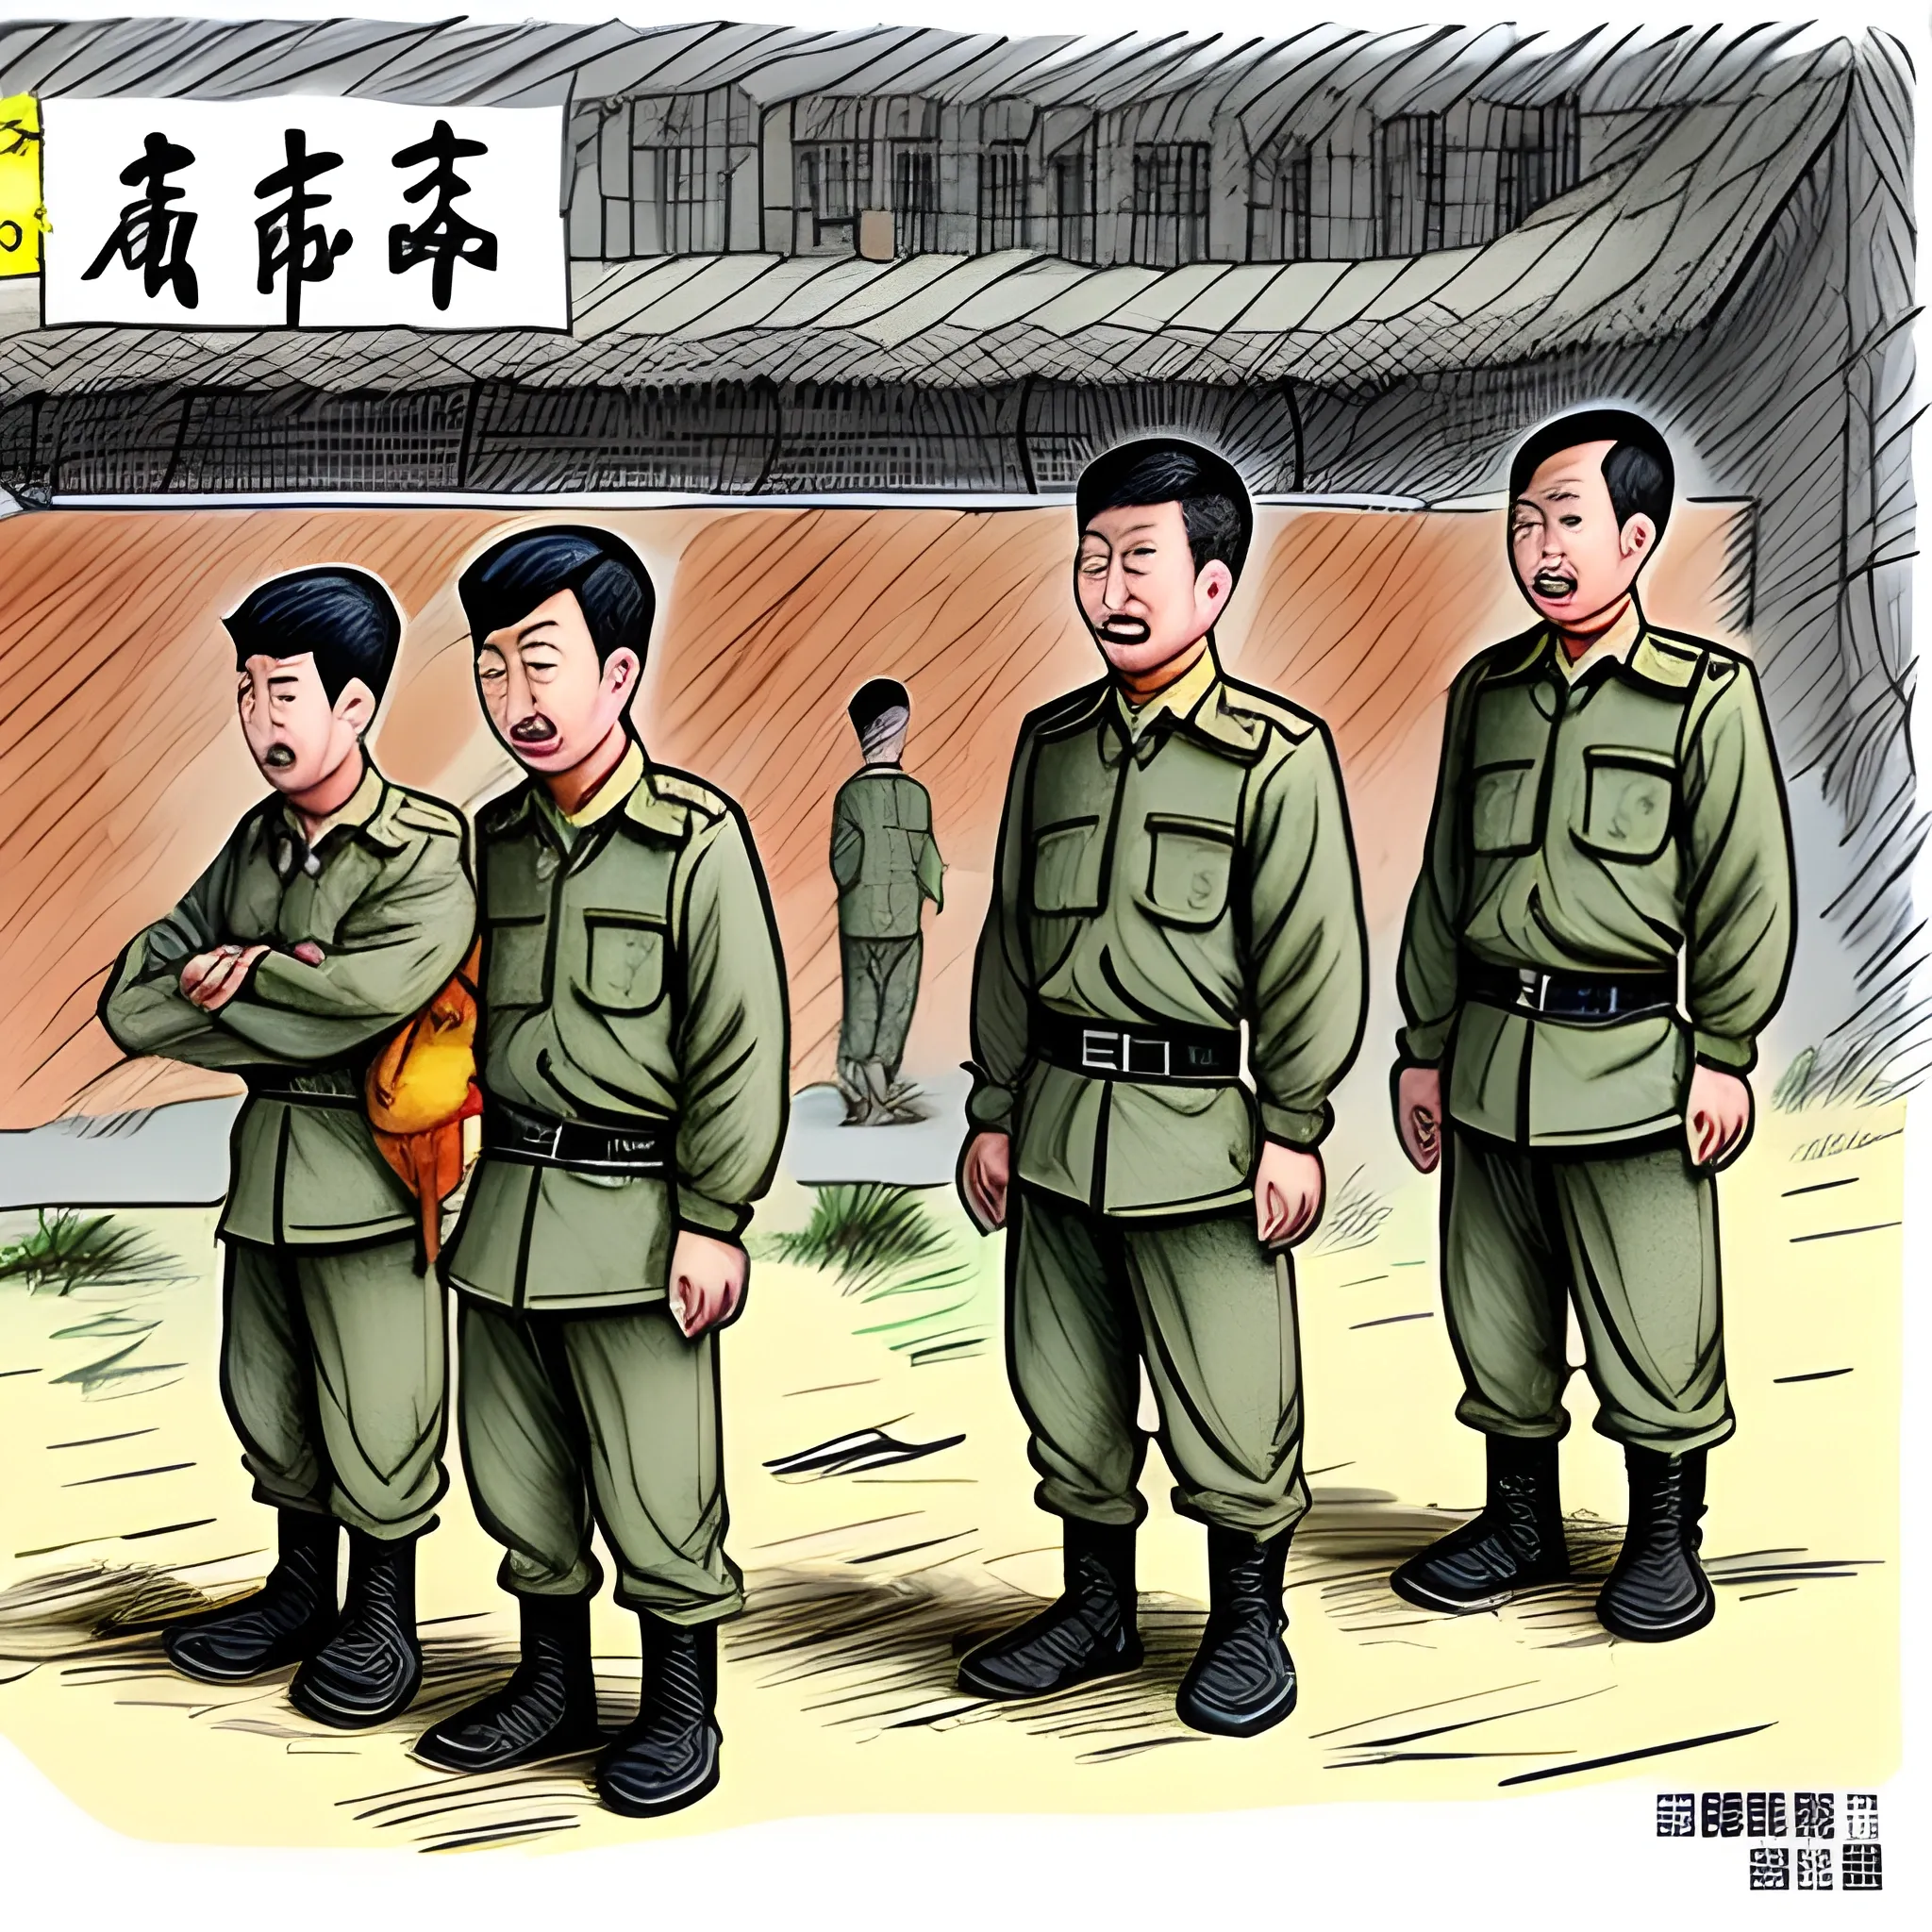 Chinese prisoners captured in war 

, Cartoon